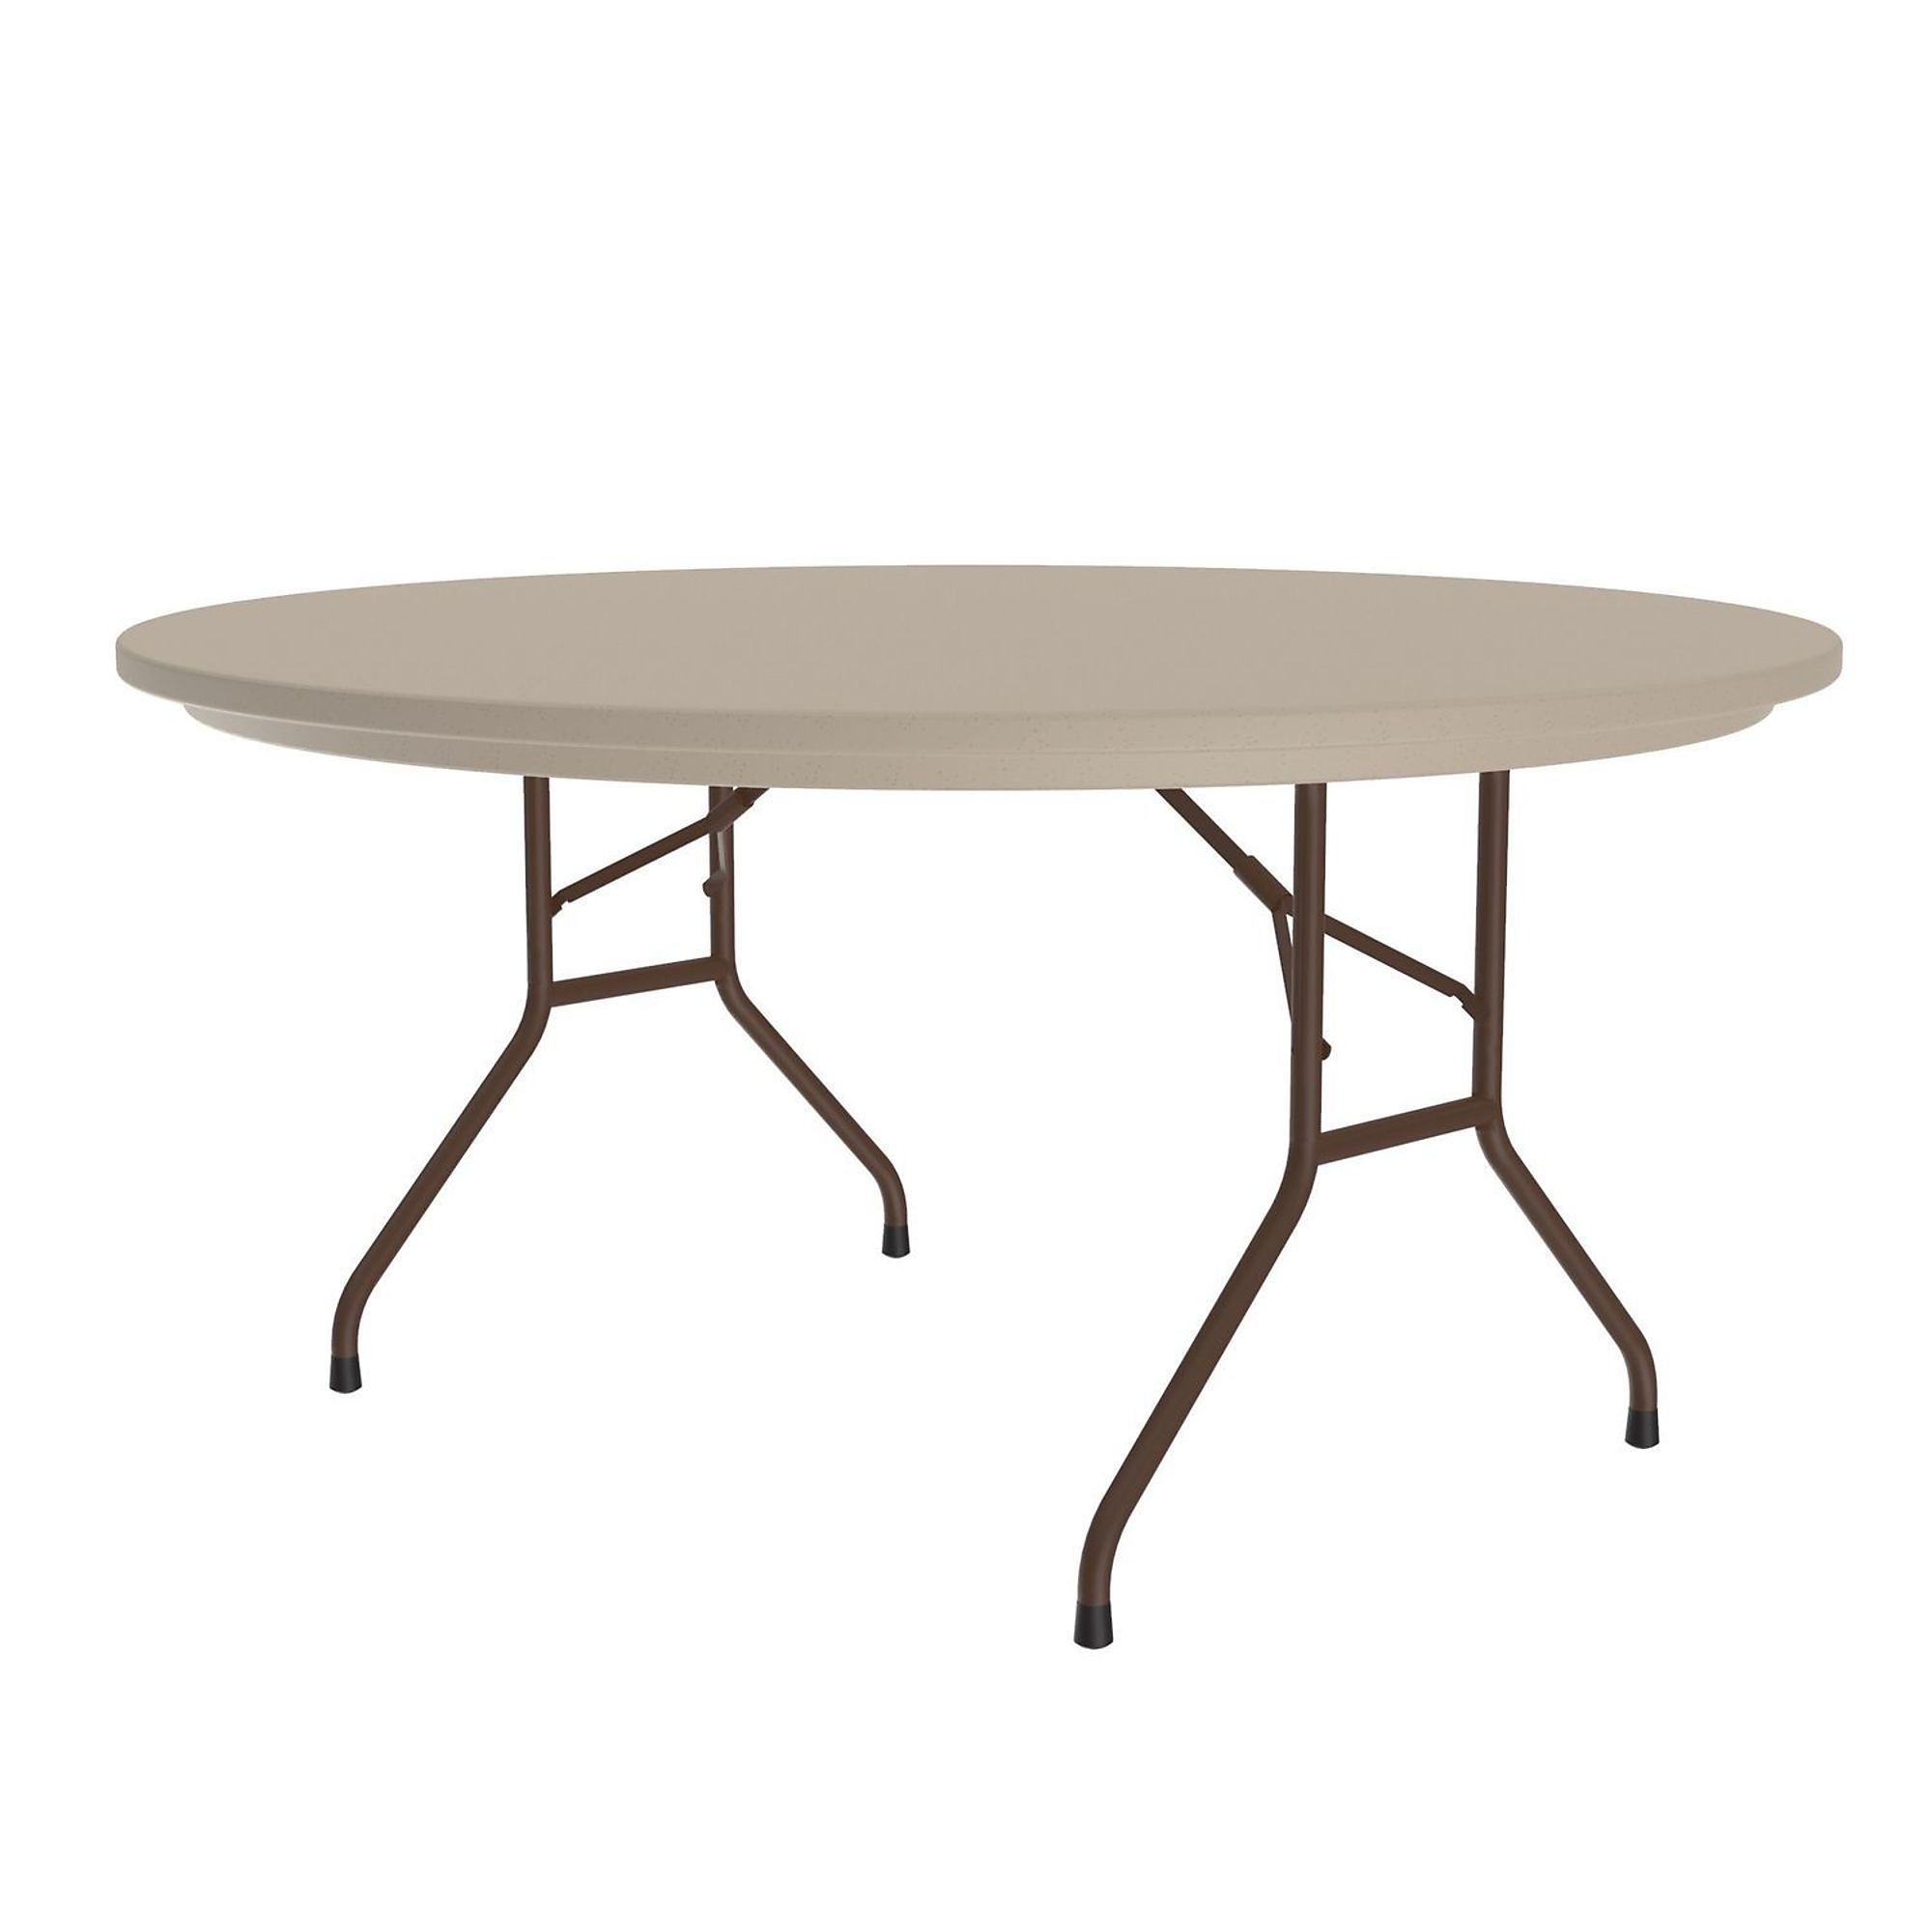 Correll, Plastic Folding Table, Mocha Granite Top, 60Inch Rnd, Height 29 in, Width 60 in, Length 60 in, Model R60-24